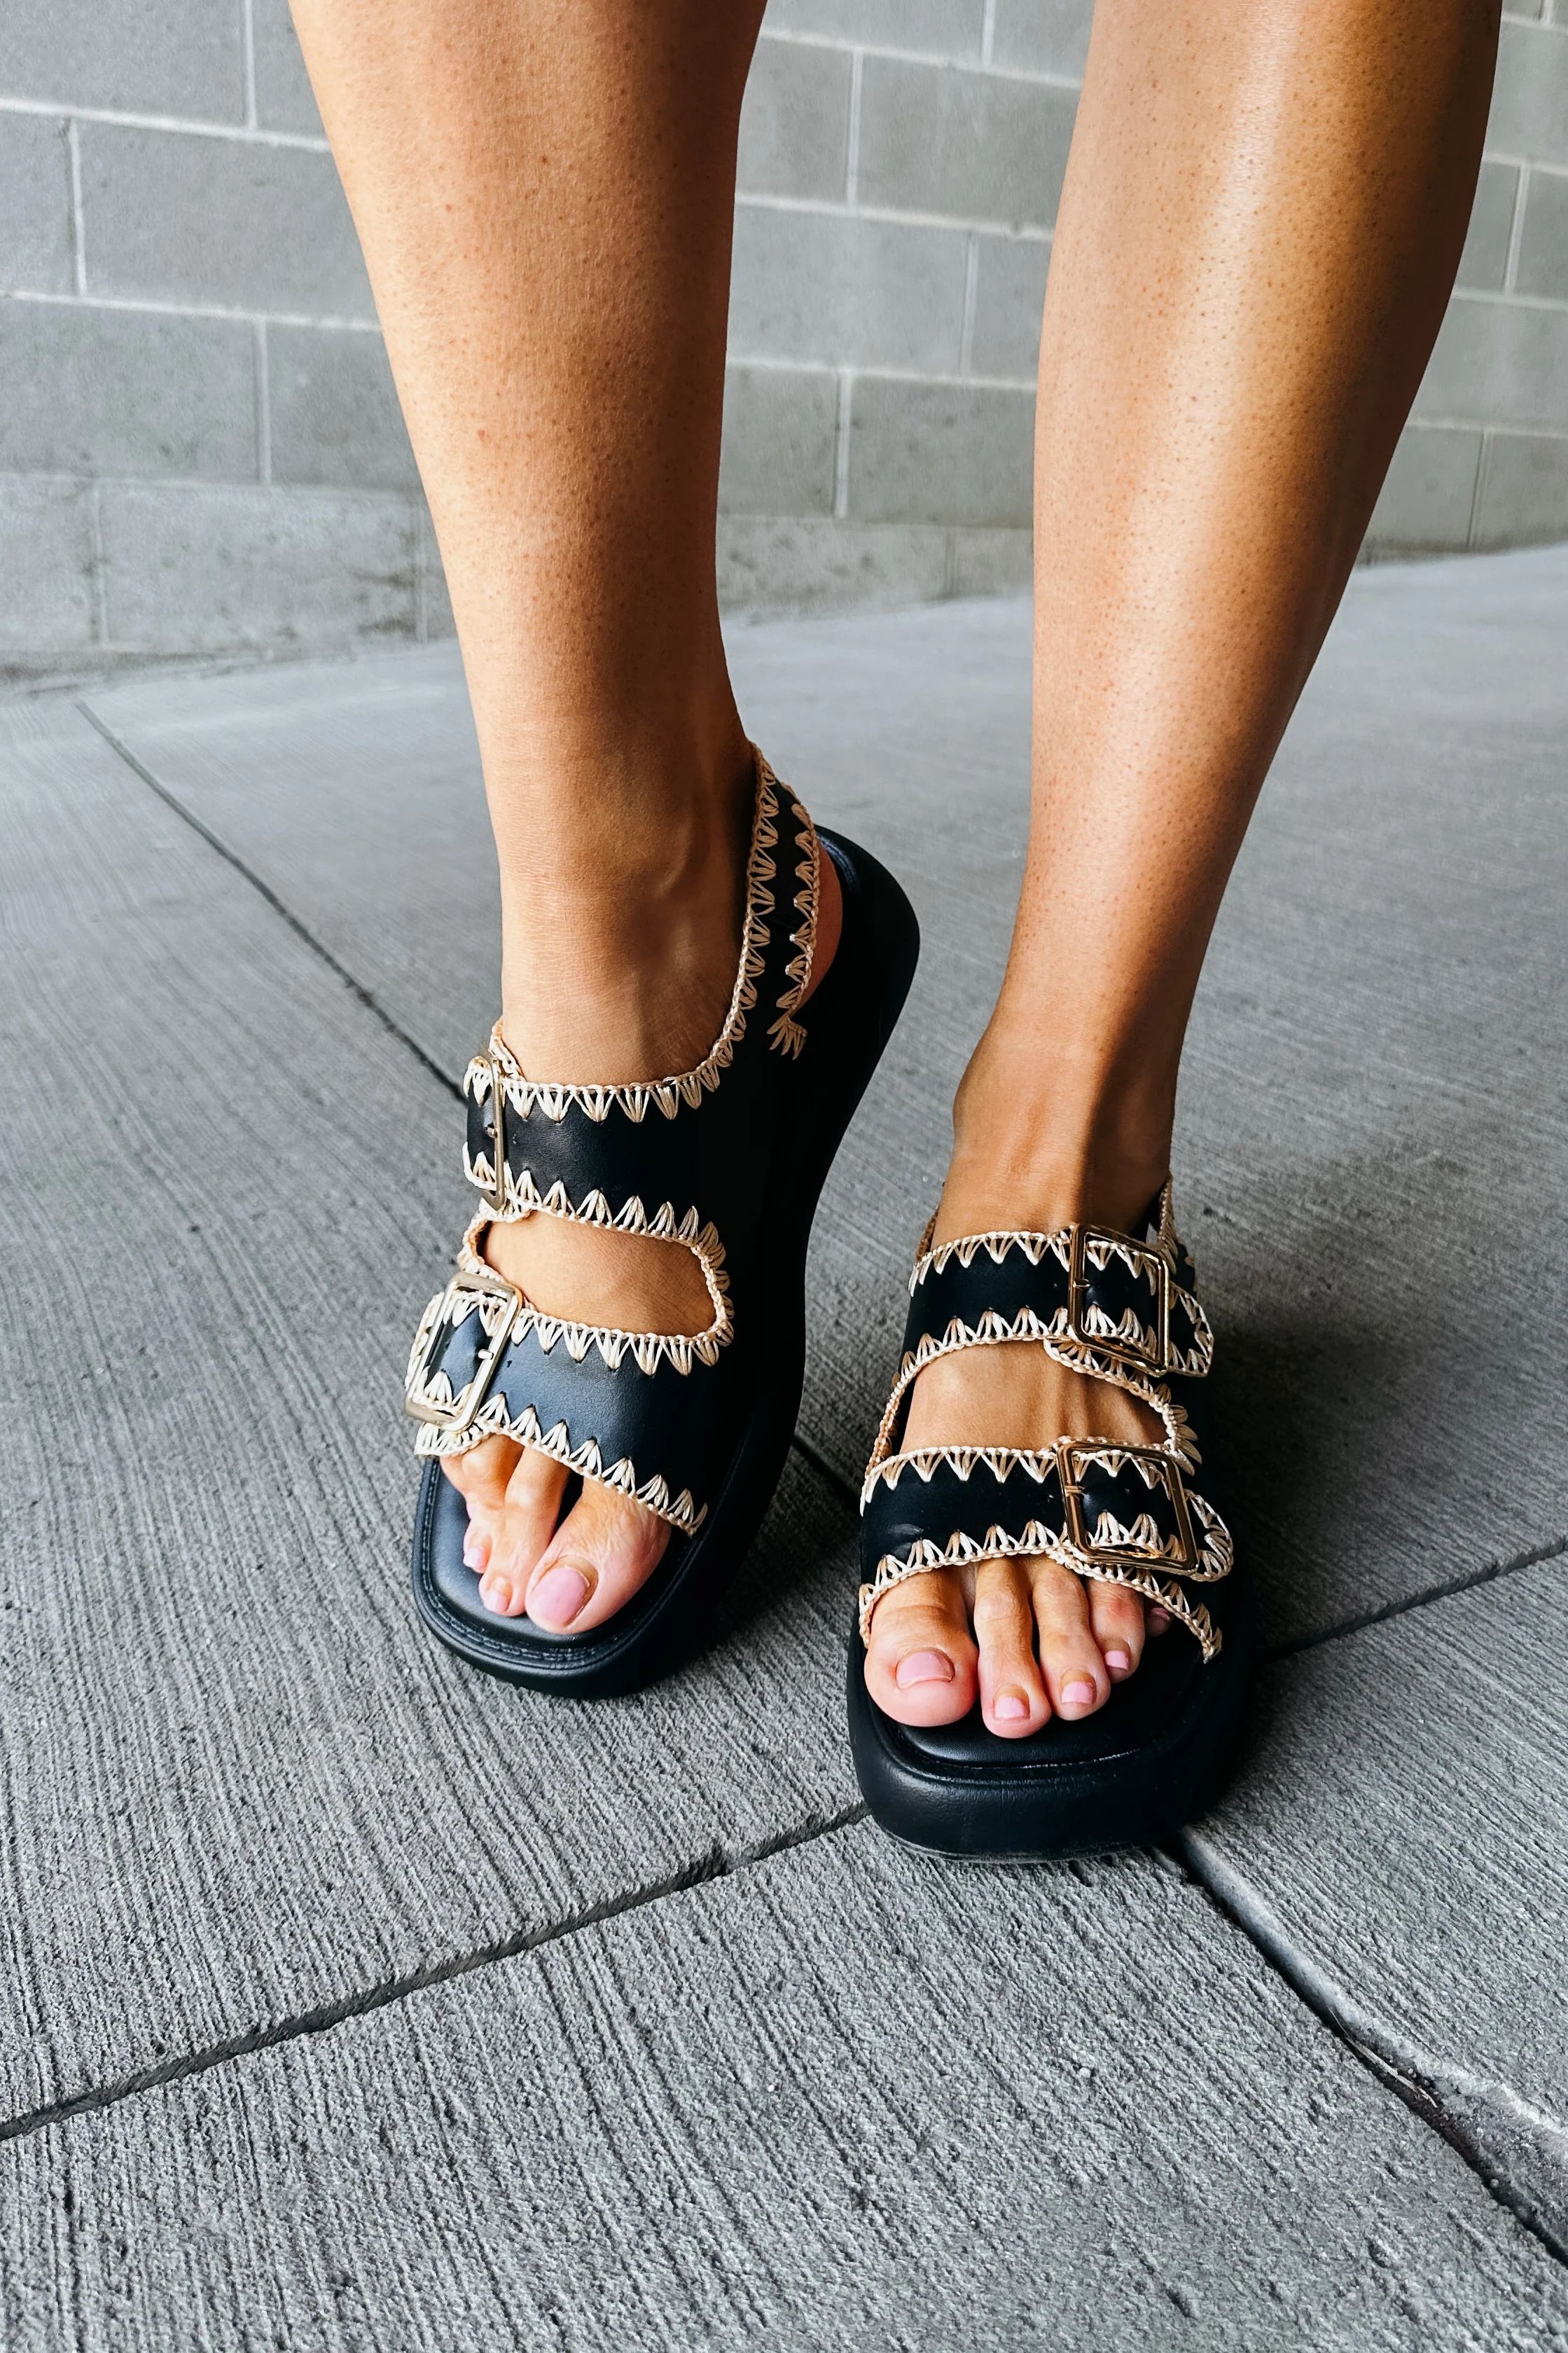 Black Leather Stitched Square Toe Strappy Sandals | Filia Sandals - Black | Mindy Mae's Market